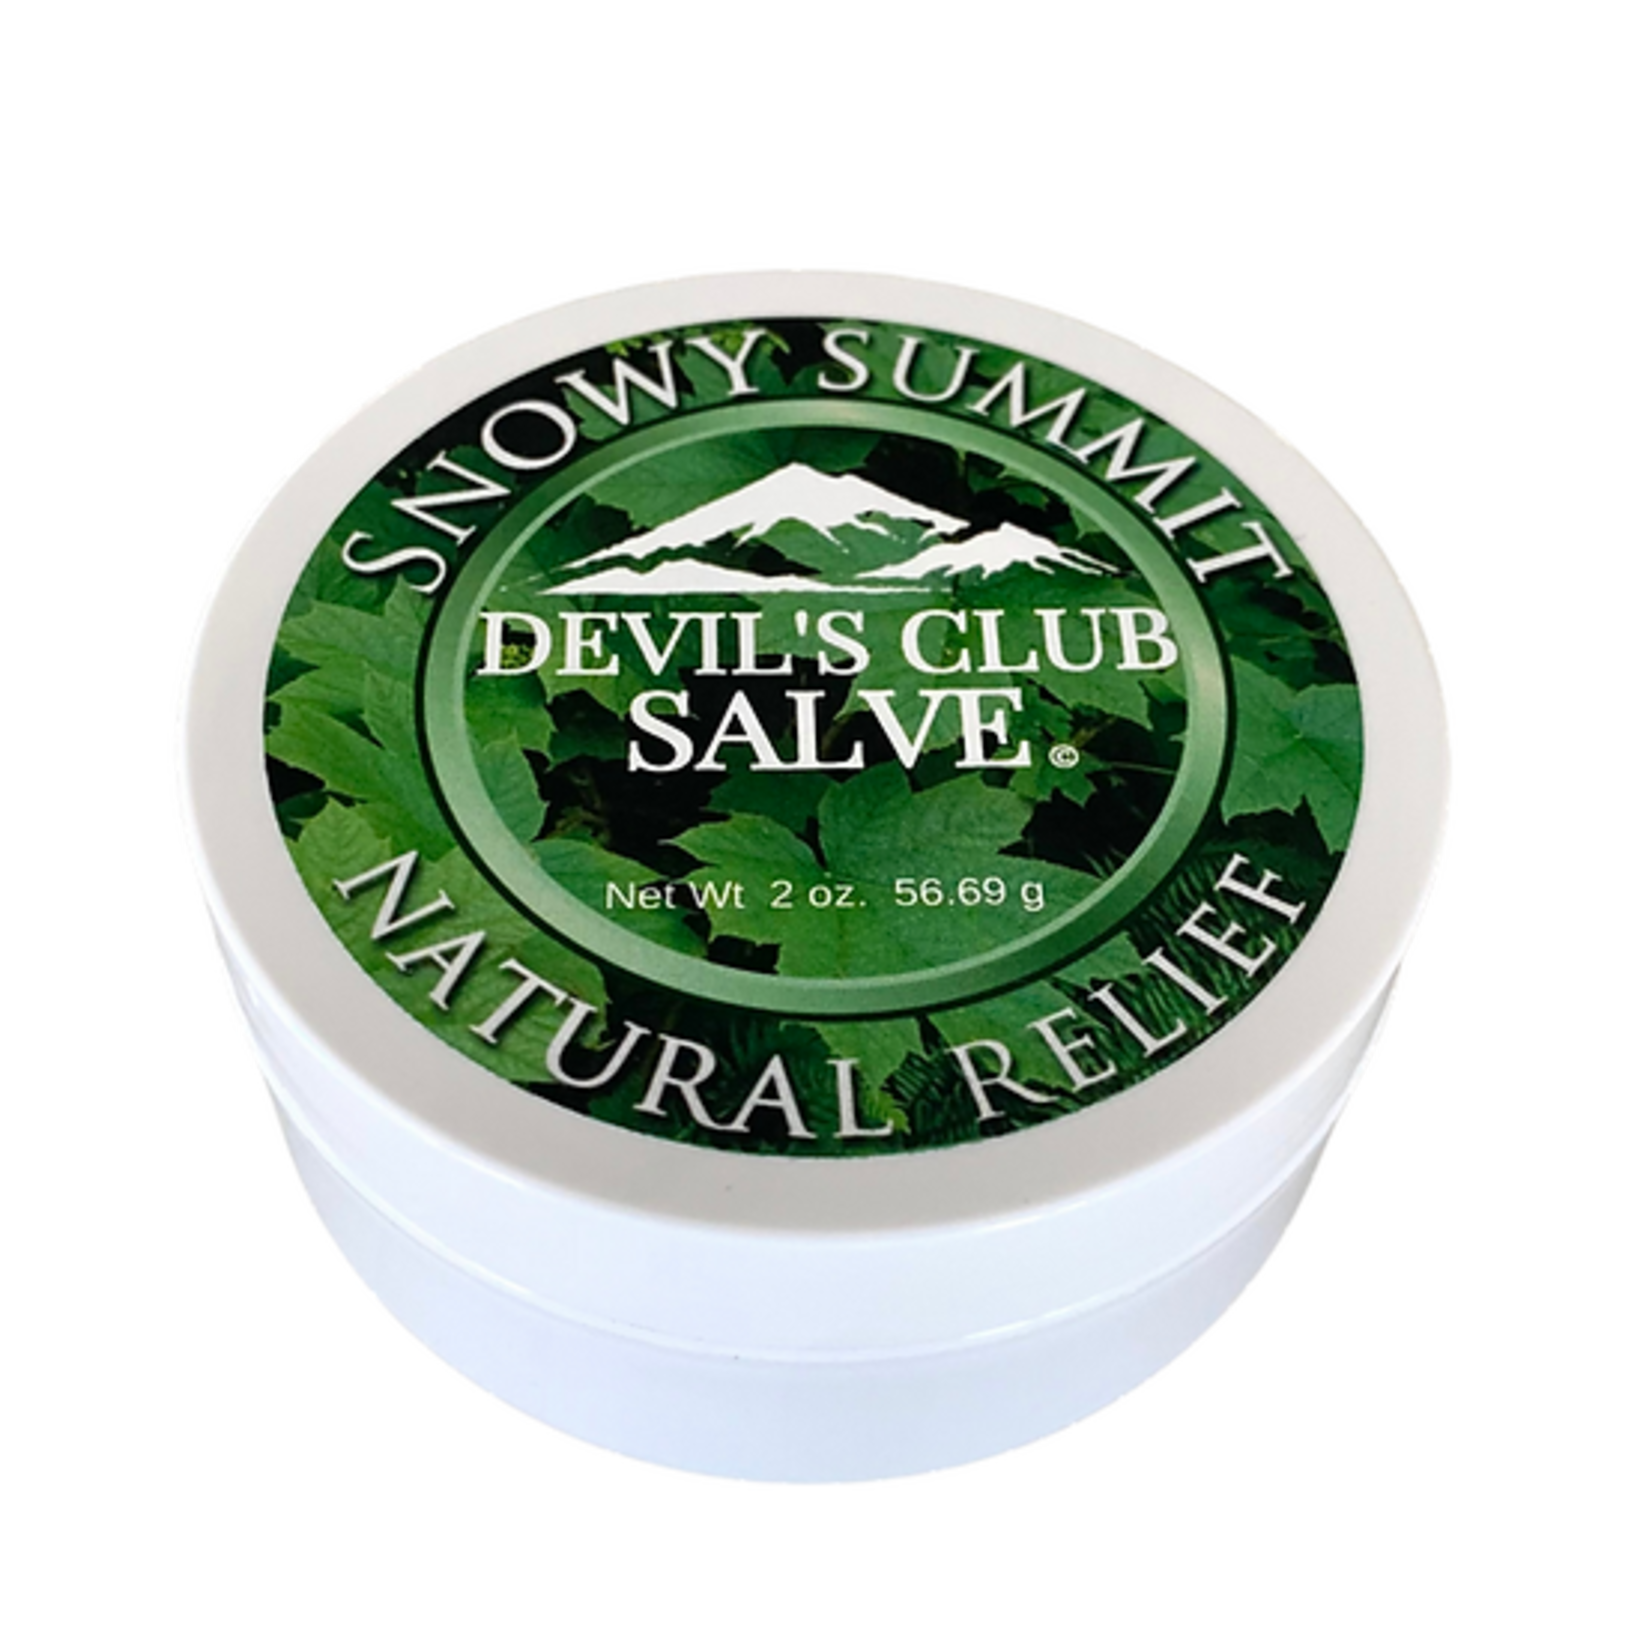 Snowy Summit CBD Devil’s Club Salve